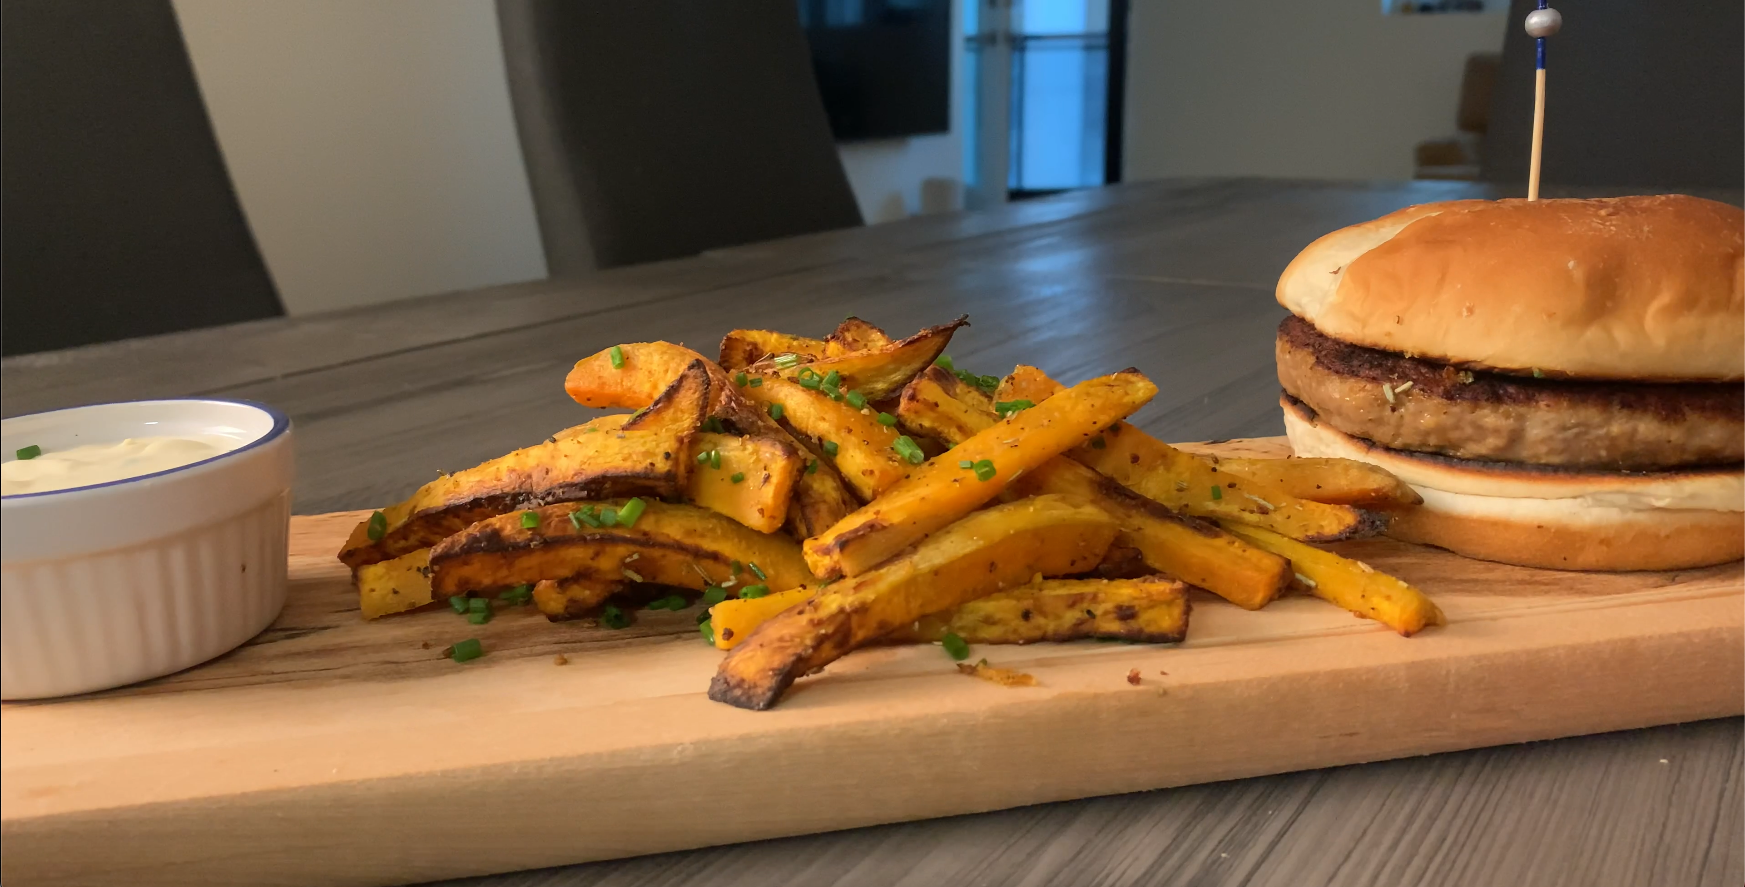 Air Fryer Sweet Potato Fries (super crispy!) - Fit Foodie Finds